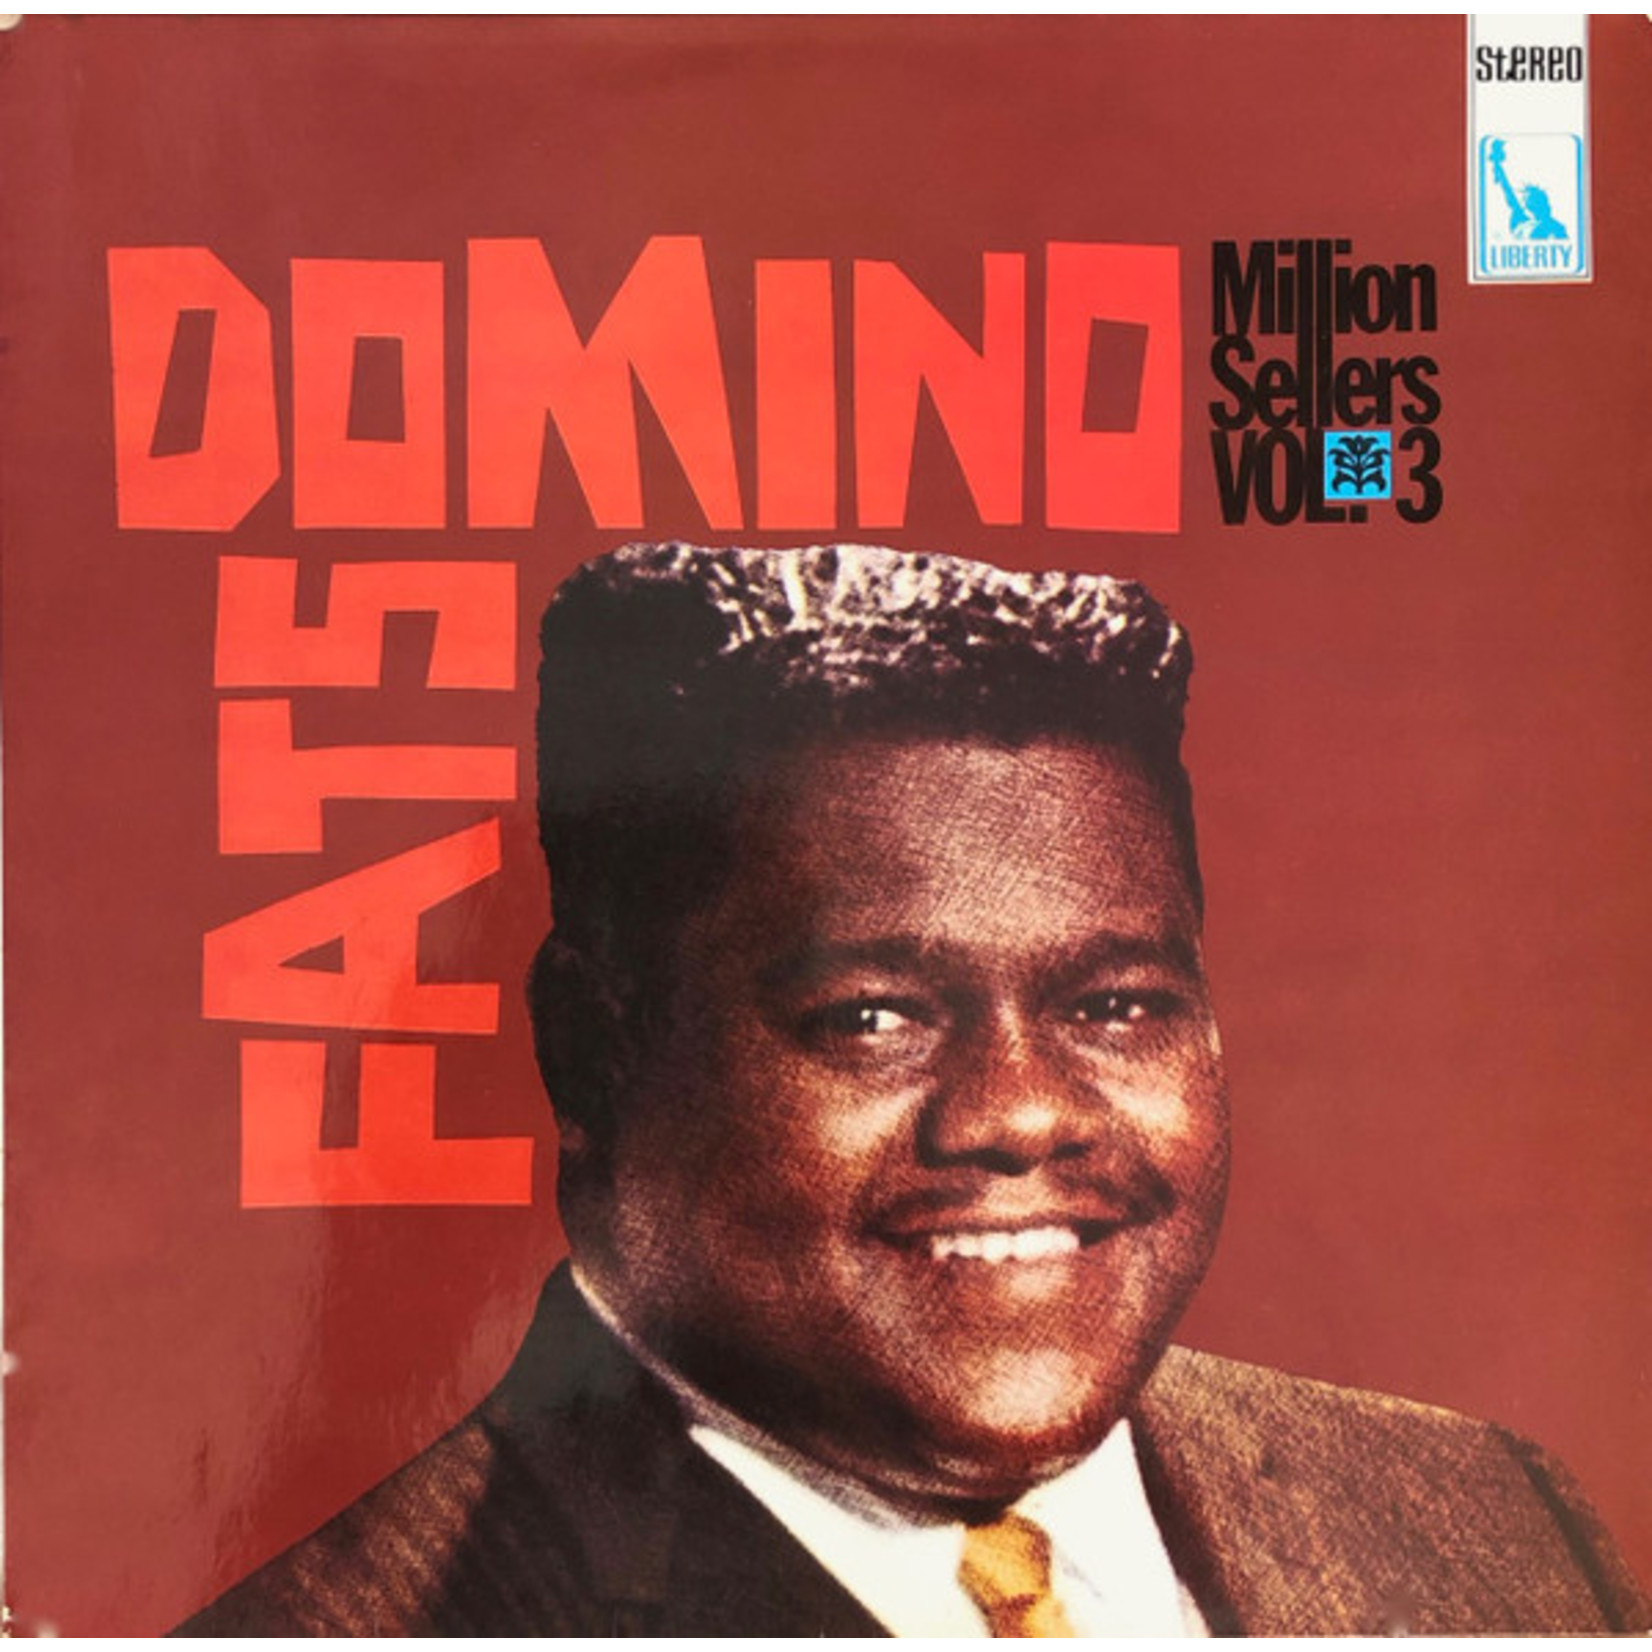 Fats Domino ‎– Million Sellers Vol. 3